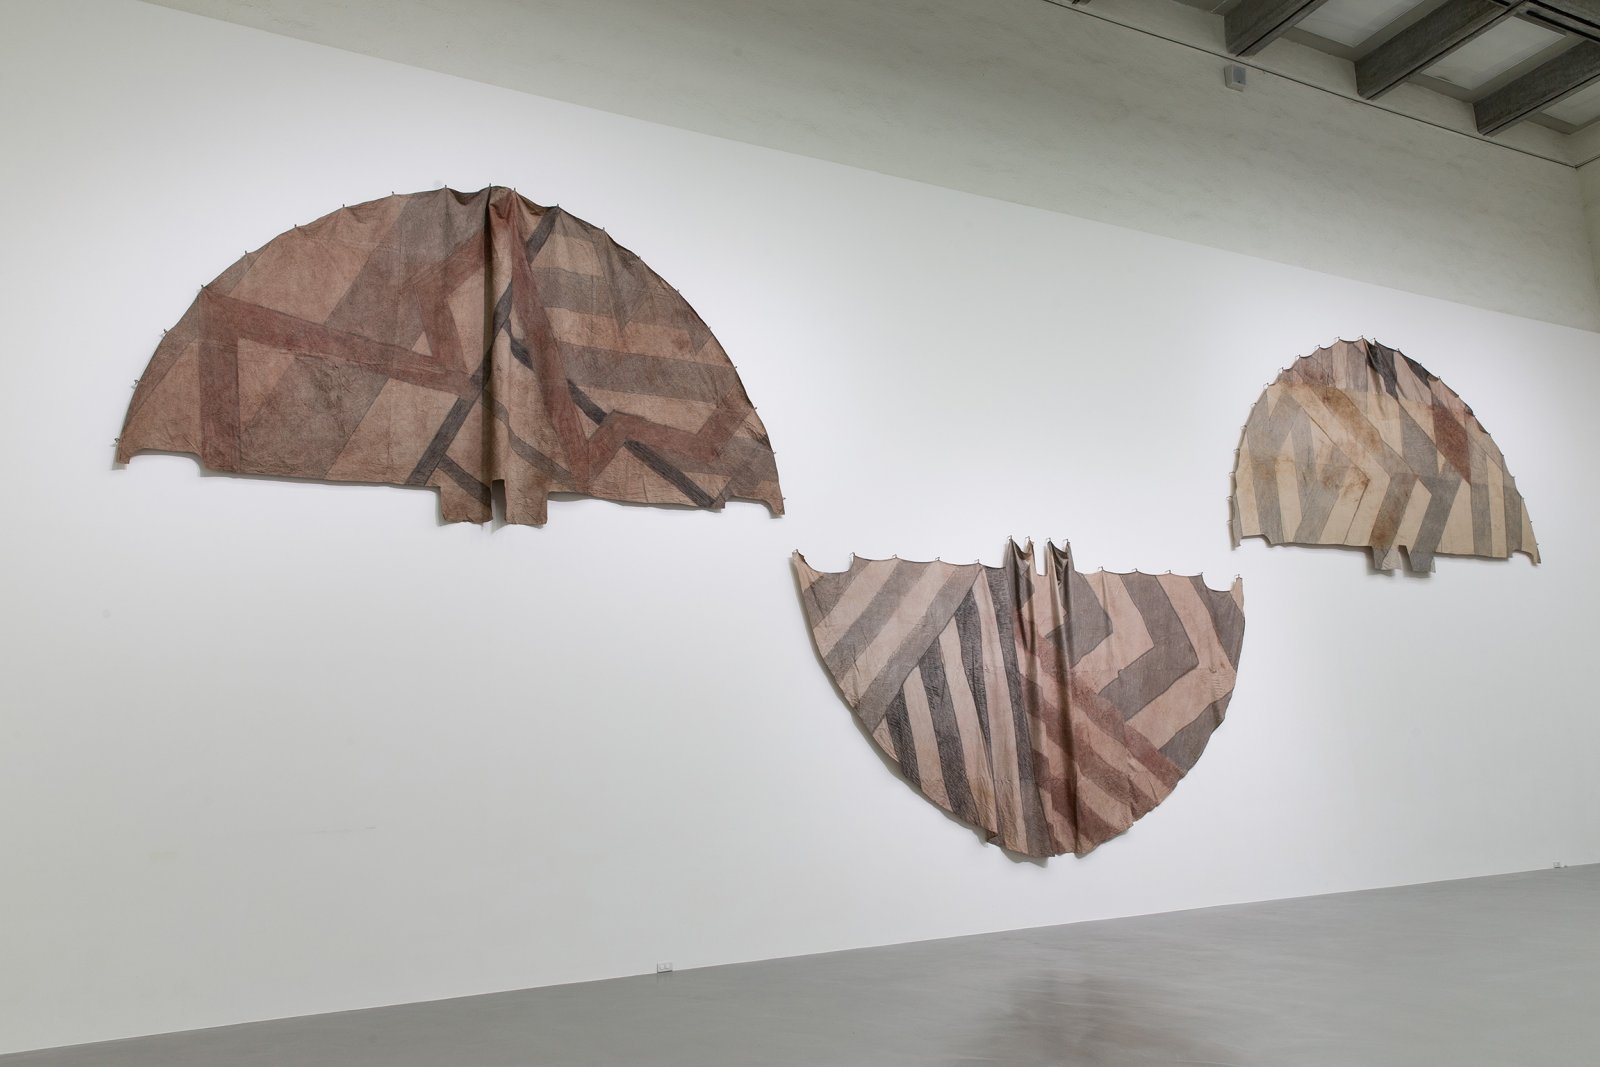 Duane Linklater, installation view, Post-Nature—A Museum as an Ecosystem, Taipei Biennial 2018, Taipei Fine Arts Museum, Taiwan, 2018